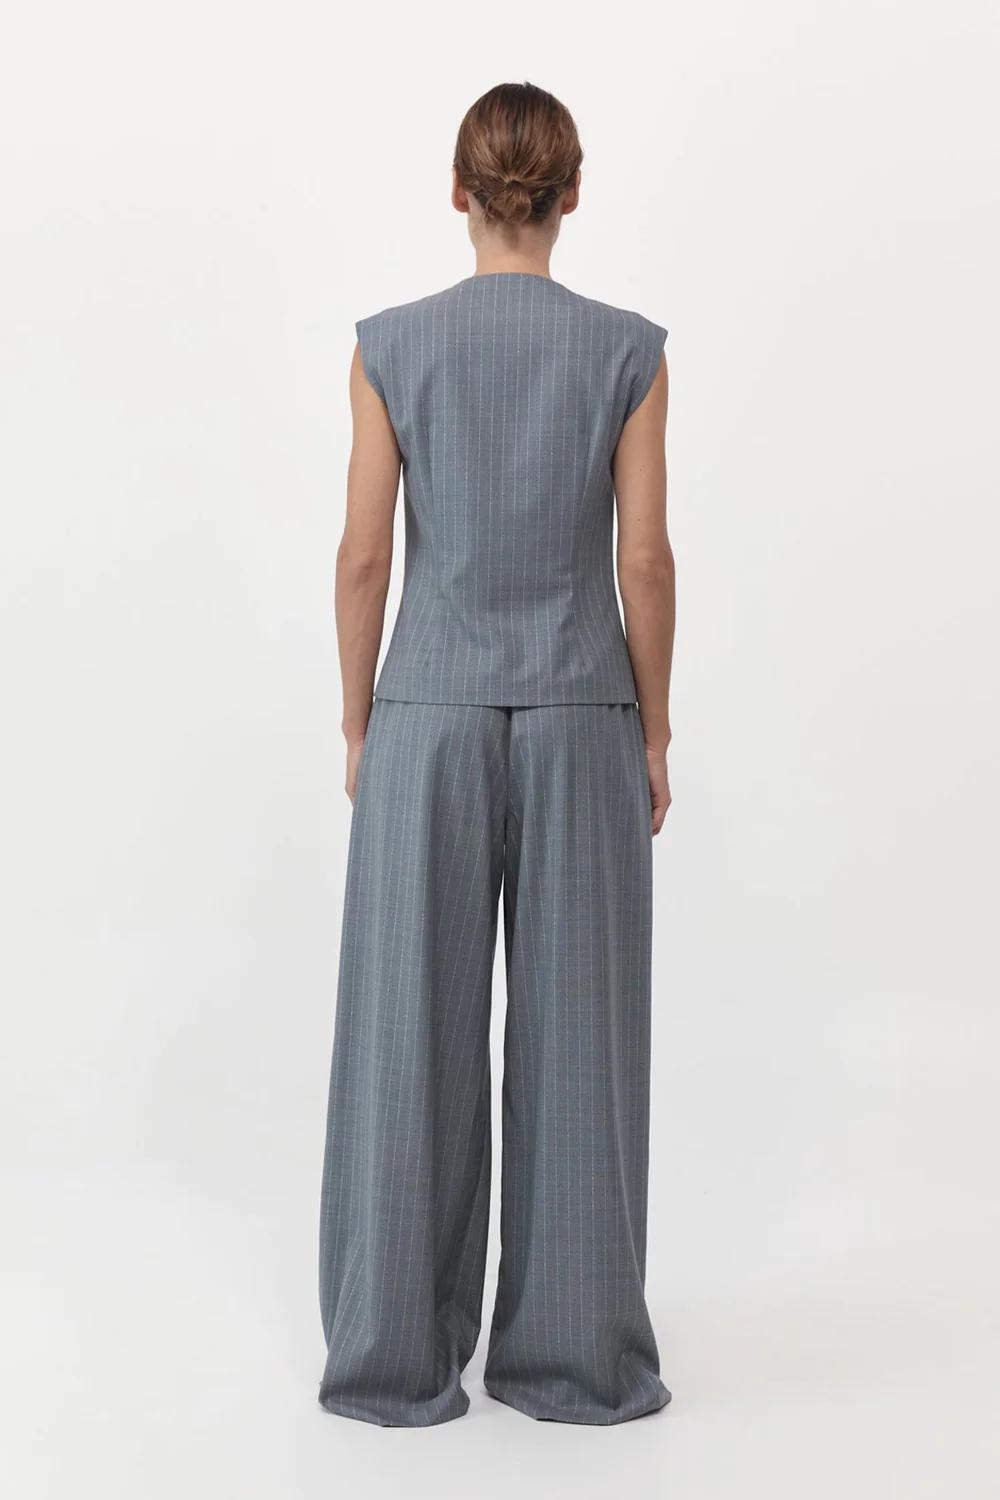 Product Image for Wool Vest, Chalk Stripe